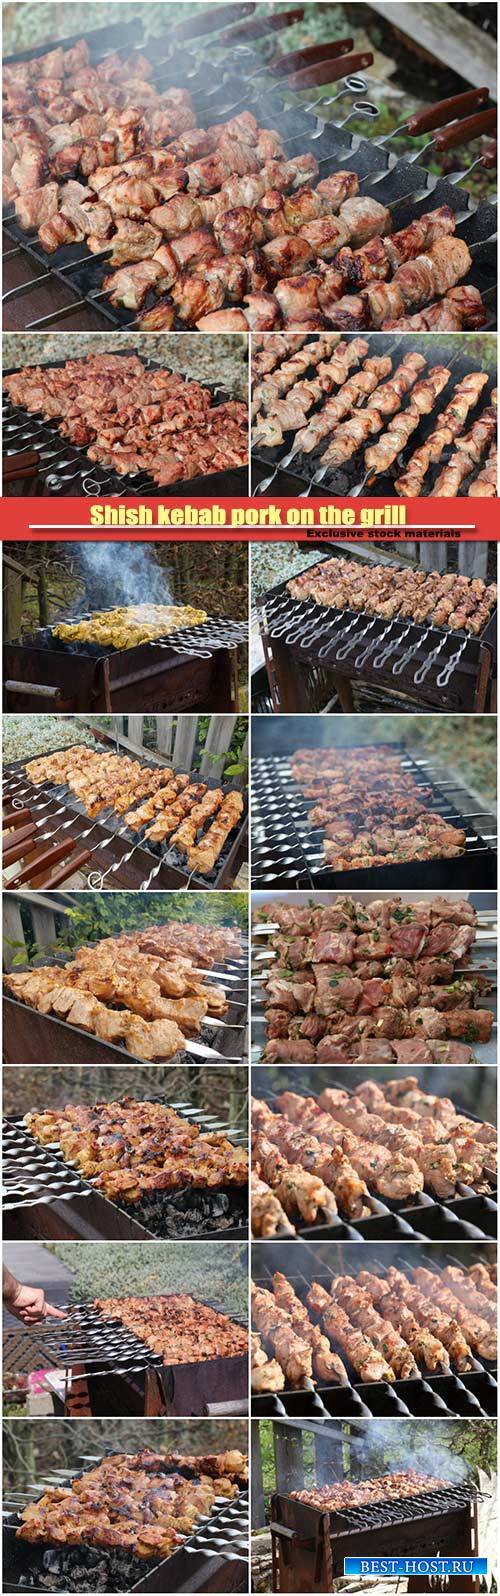 Shish kebab pork on the grill